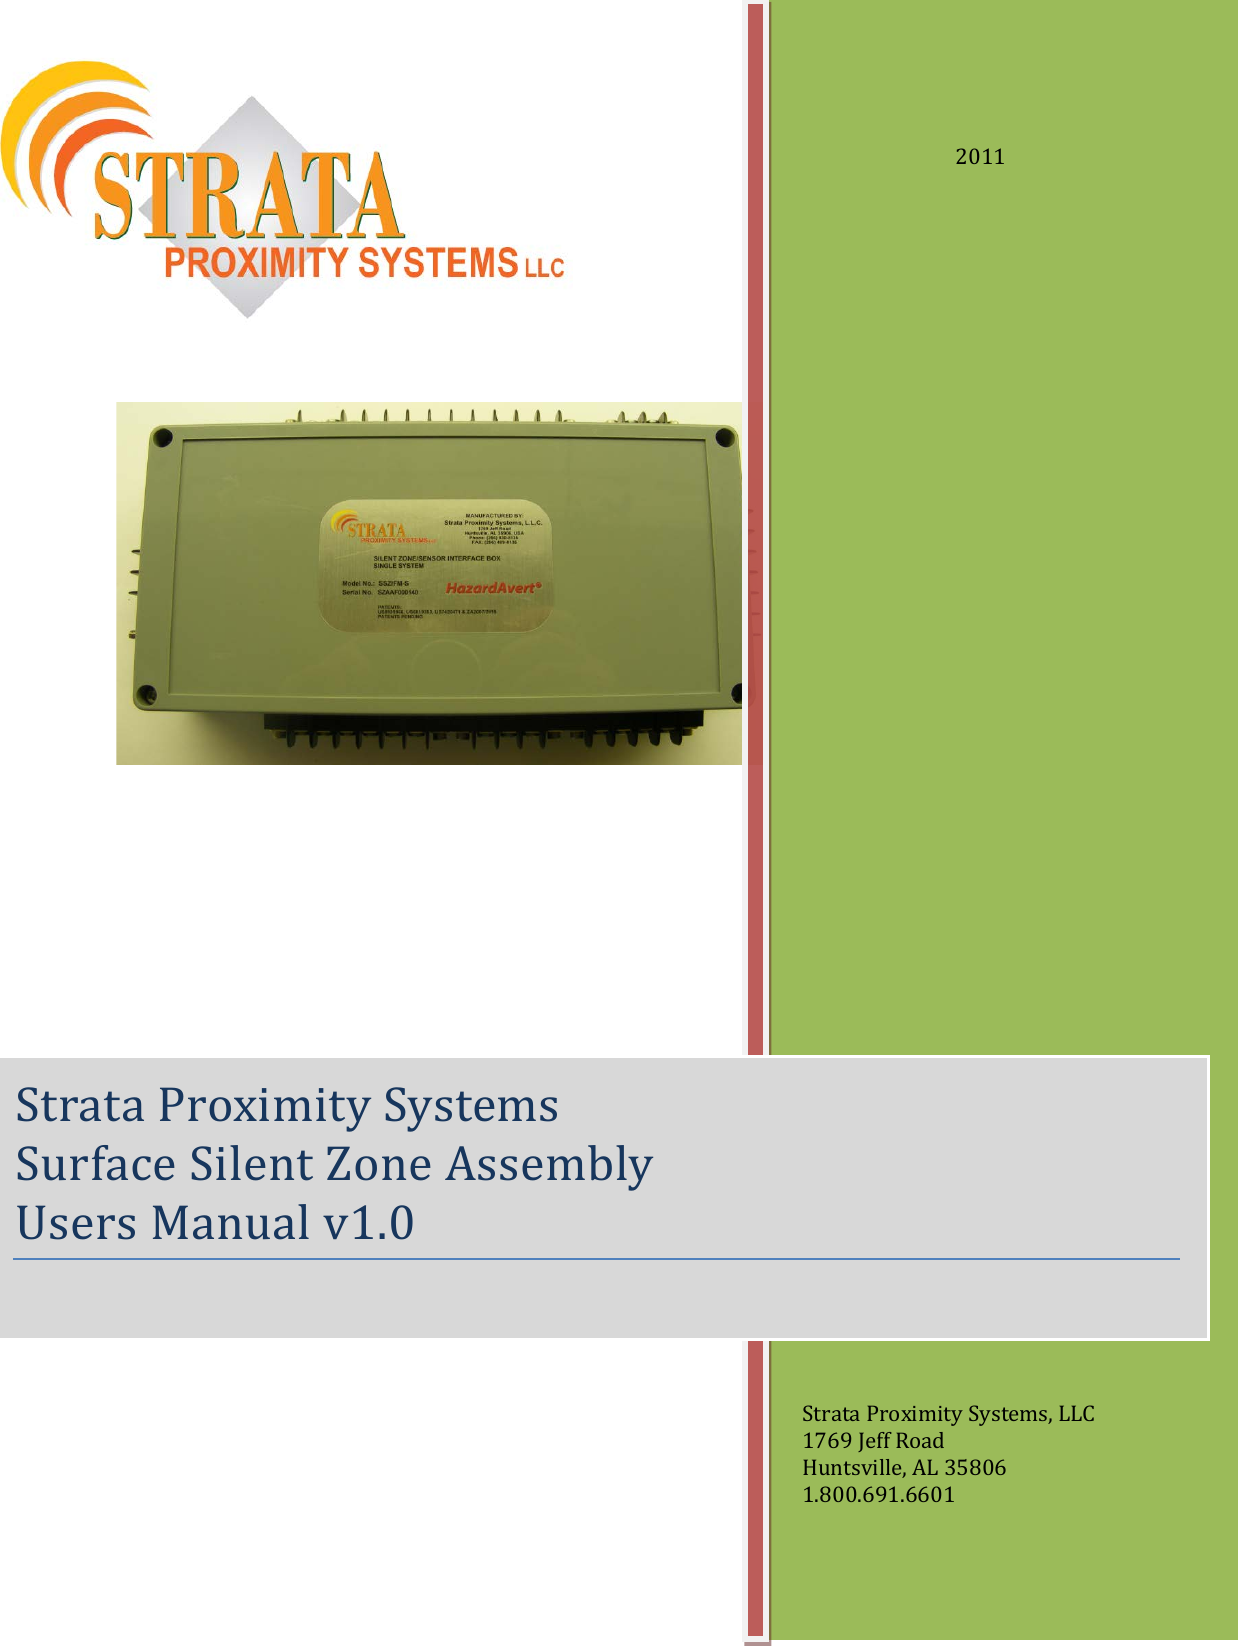                                Strata Proximity Systems Surface Silent Zone Assembly     Users Manual v1.0   2011 Strata Proximity Systems, LLC 1769 Jeff Road Huntsville, AL 35806 1.800.691.6601 